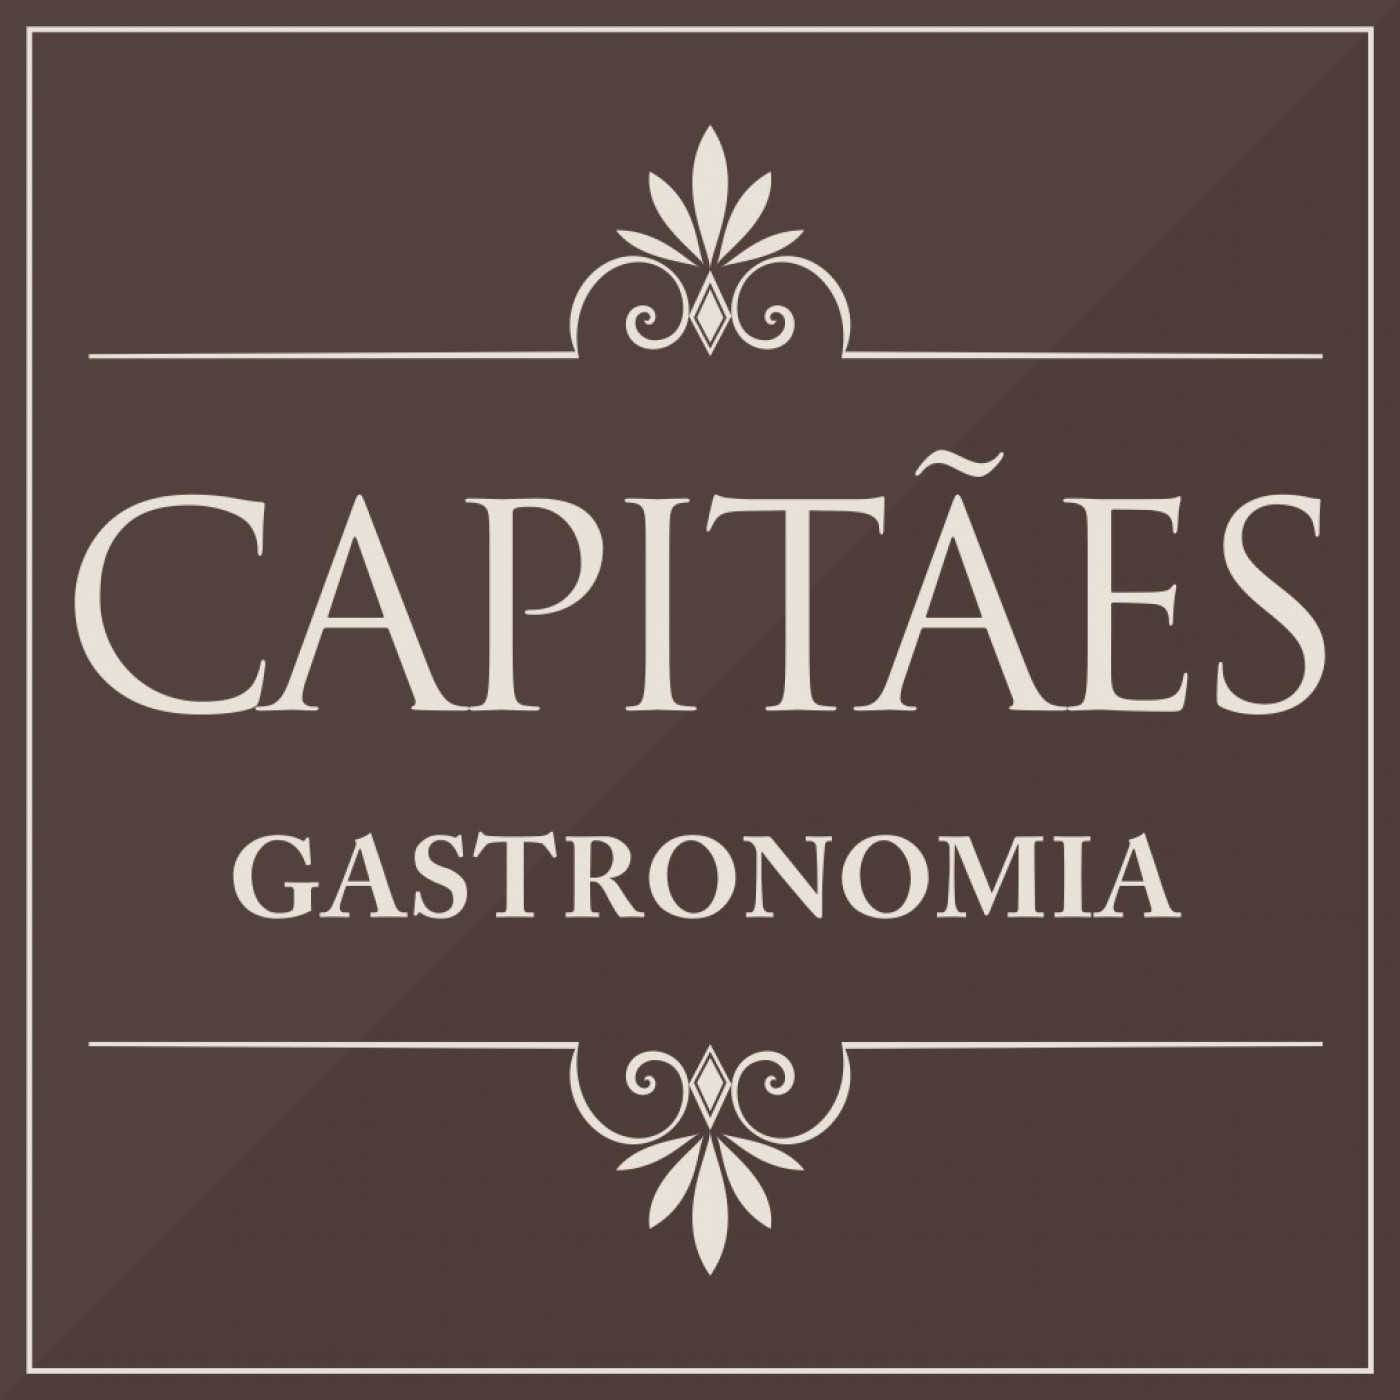 Capitães Gastronomia